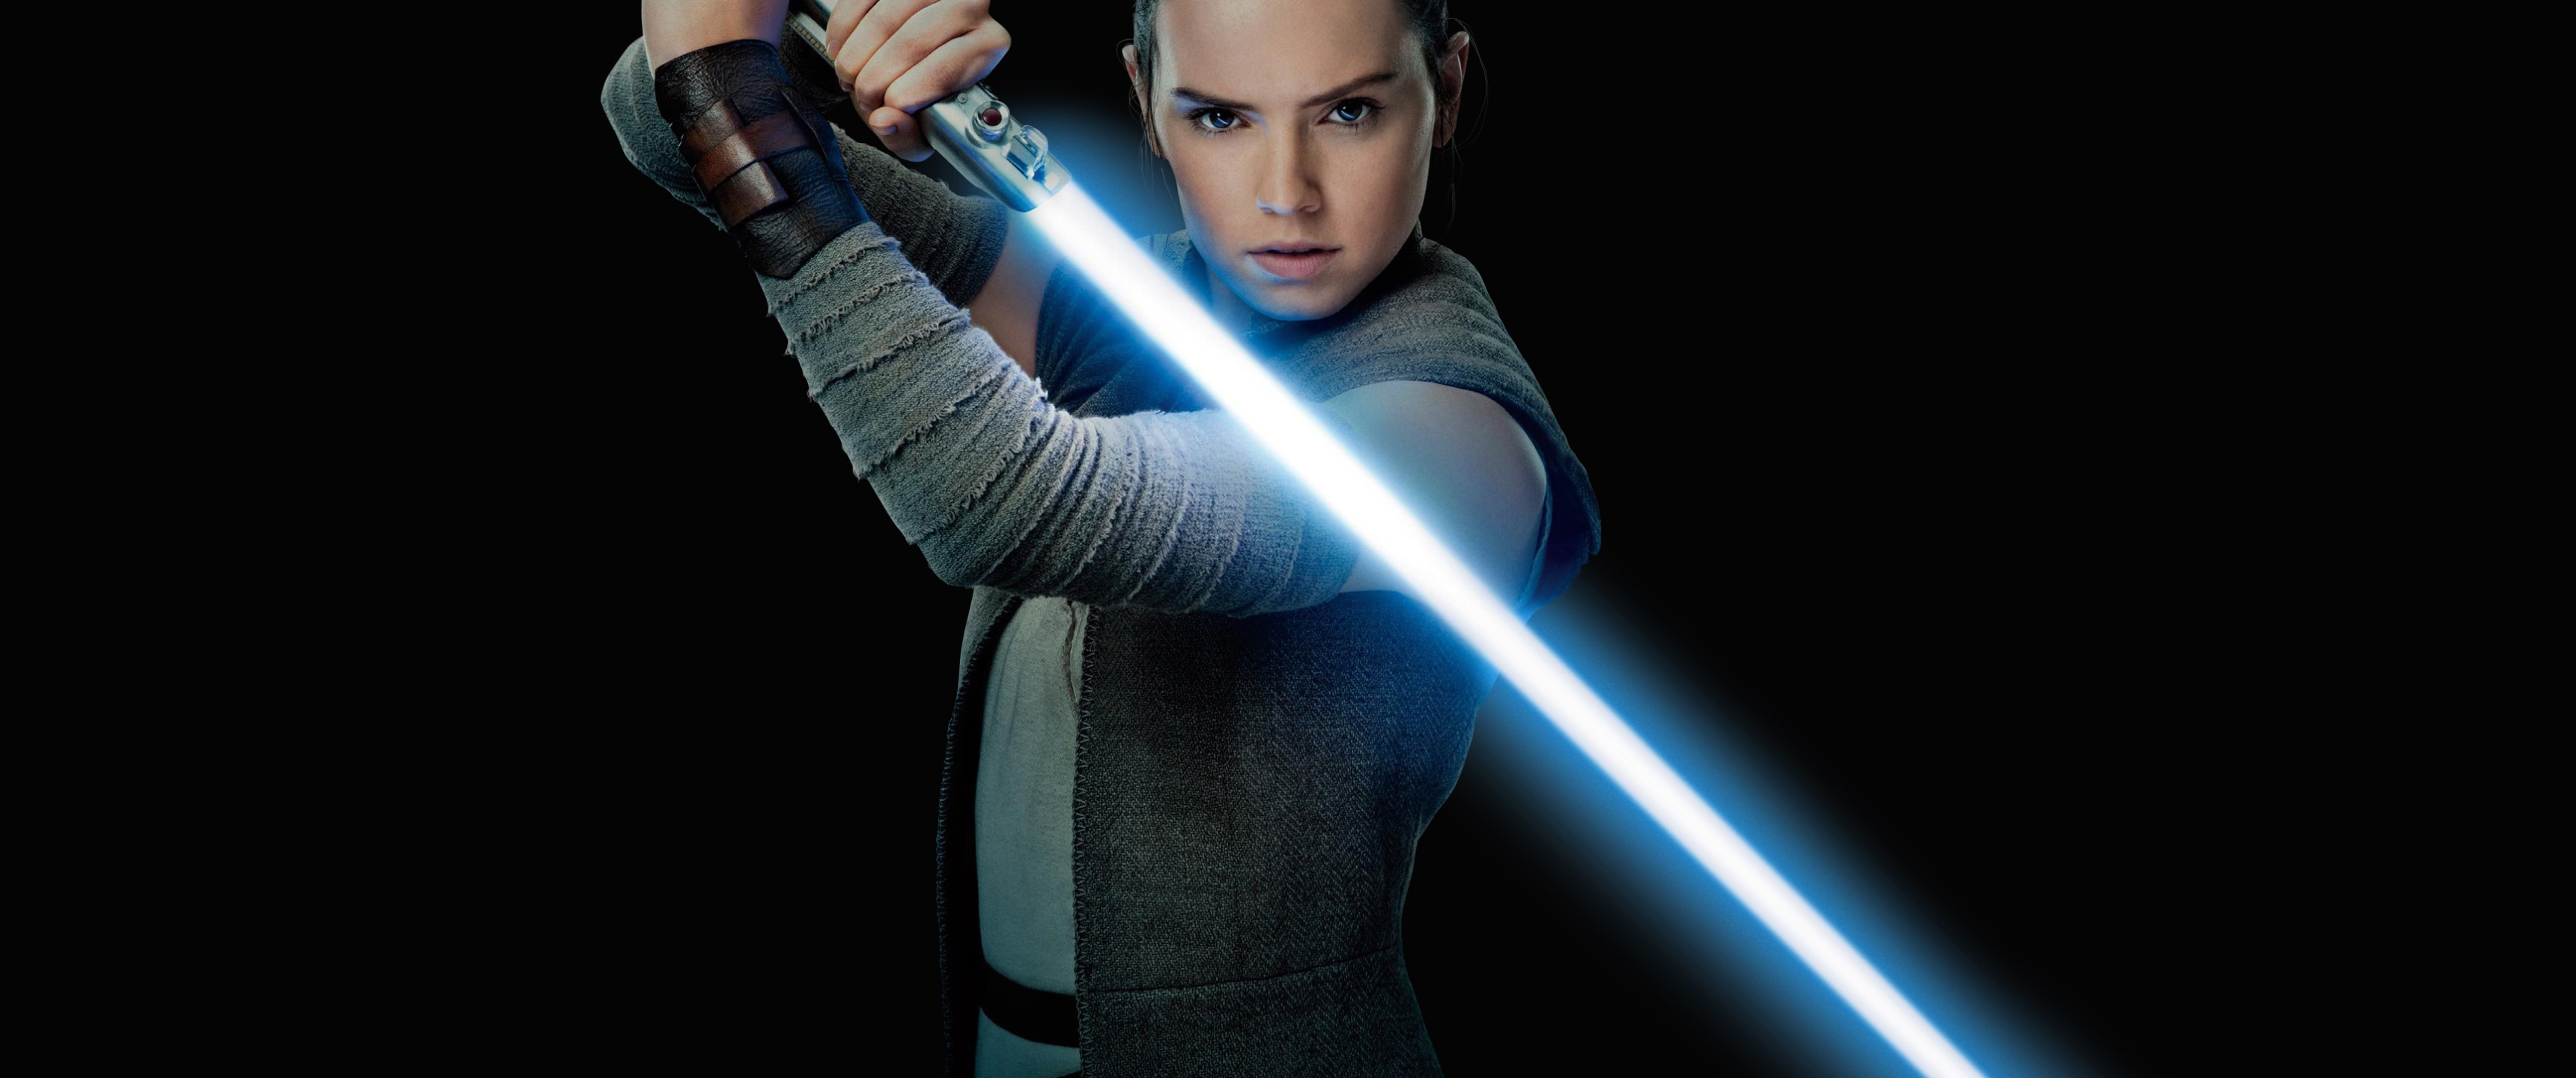 X Resolution Daisy Ridley As Rey Star Wars In The Last Jedi